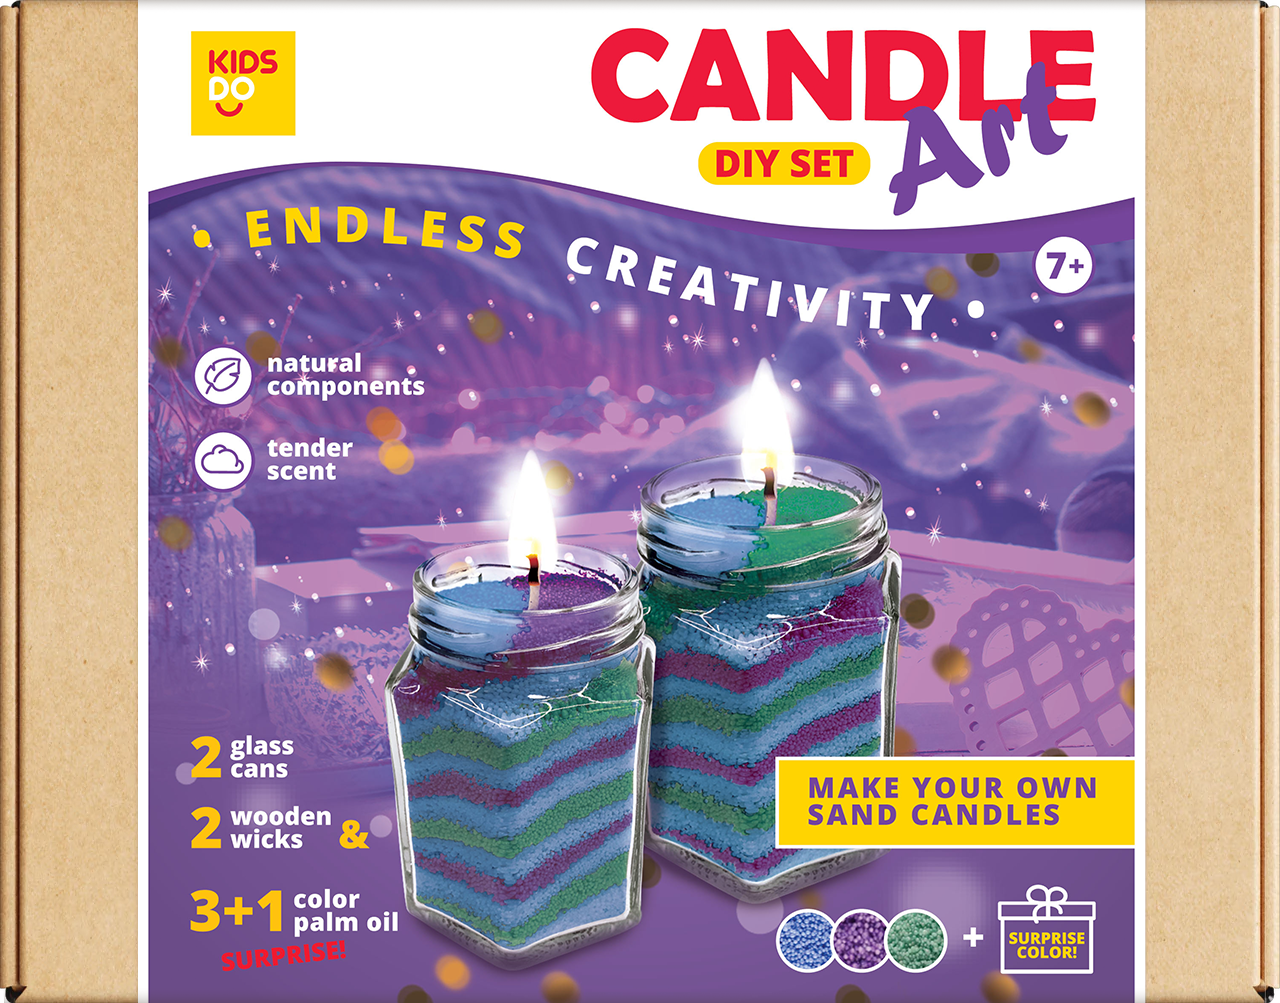 DIY Candle Art set. Purple, green, blue + 1 SURPRISE color - Toy Land -  wholesale store for children's goods